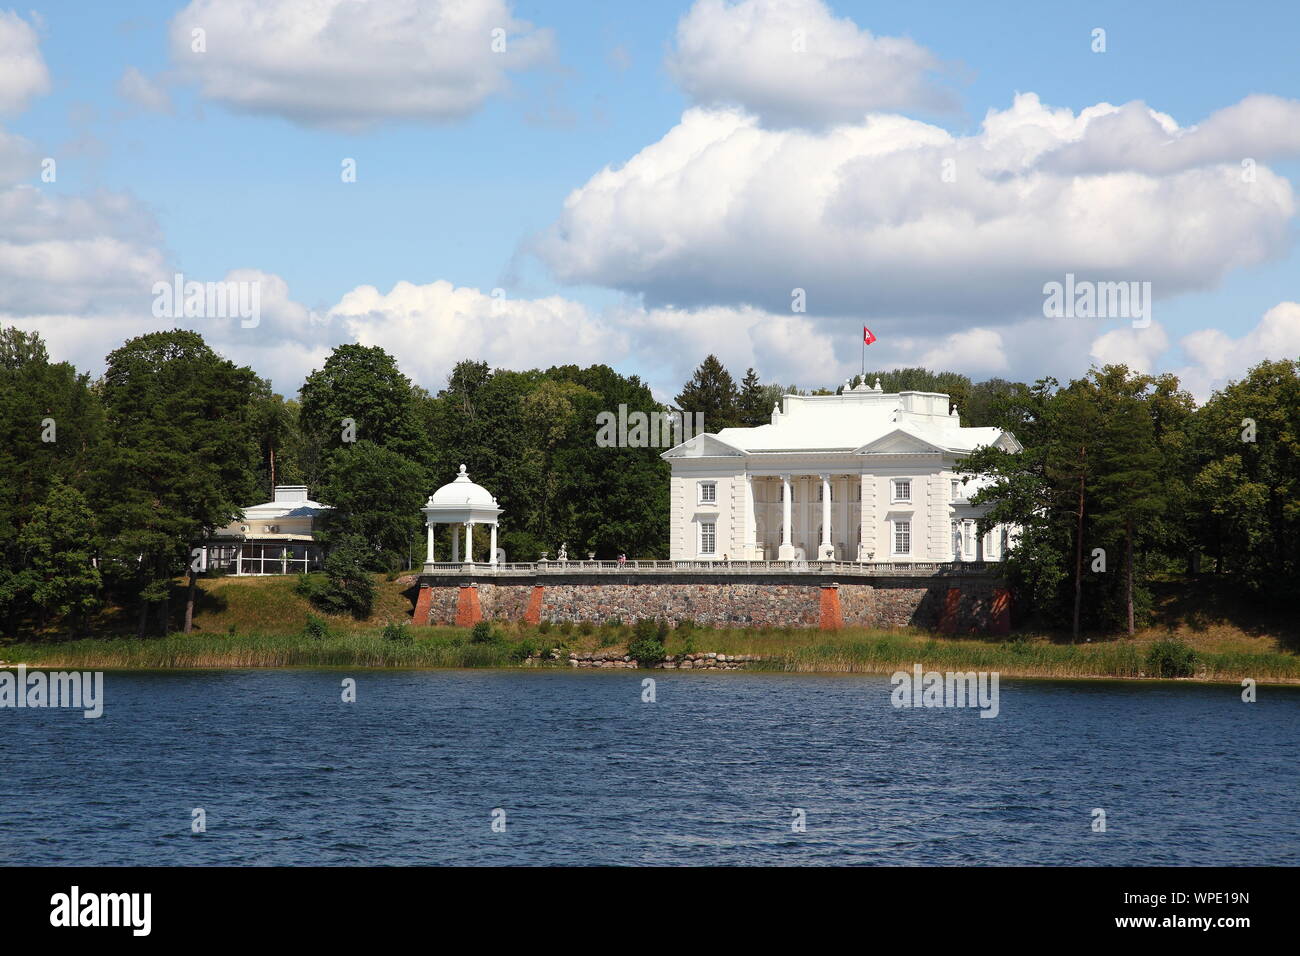 Lithuania's Prime Minister's Summer Residence on Lake Galve at Trakai, Lithuania Stock Photo